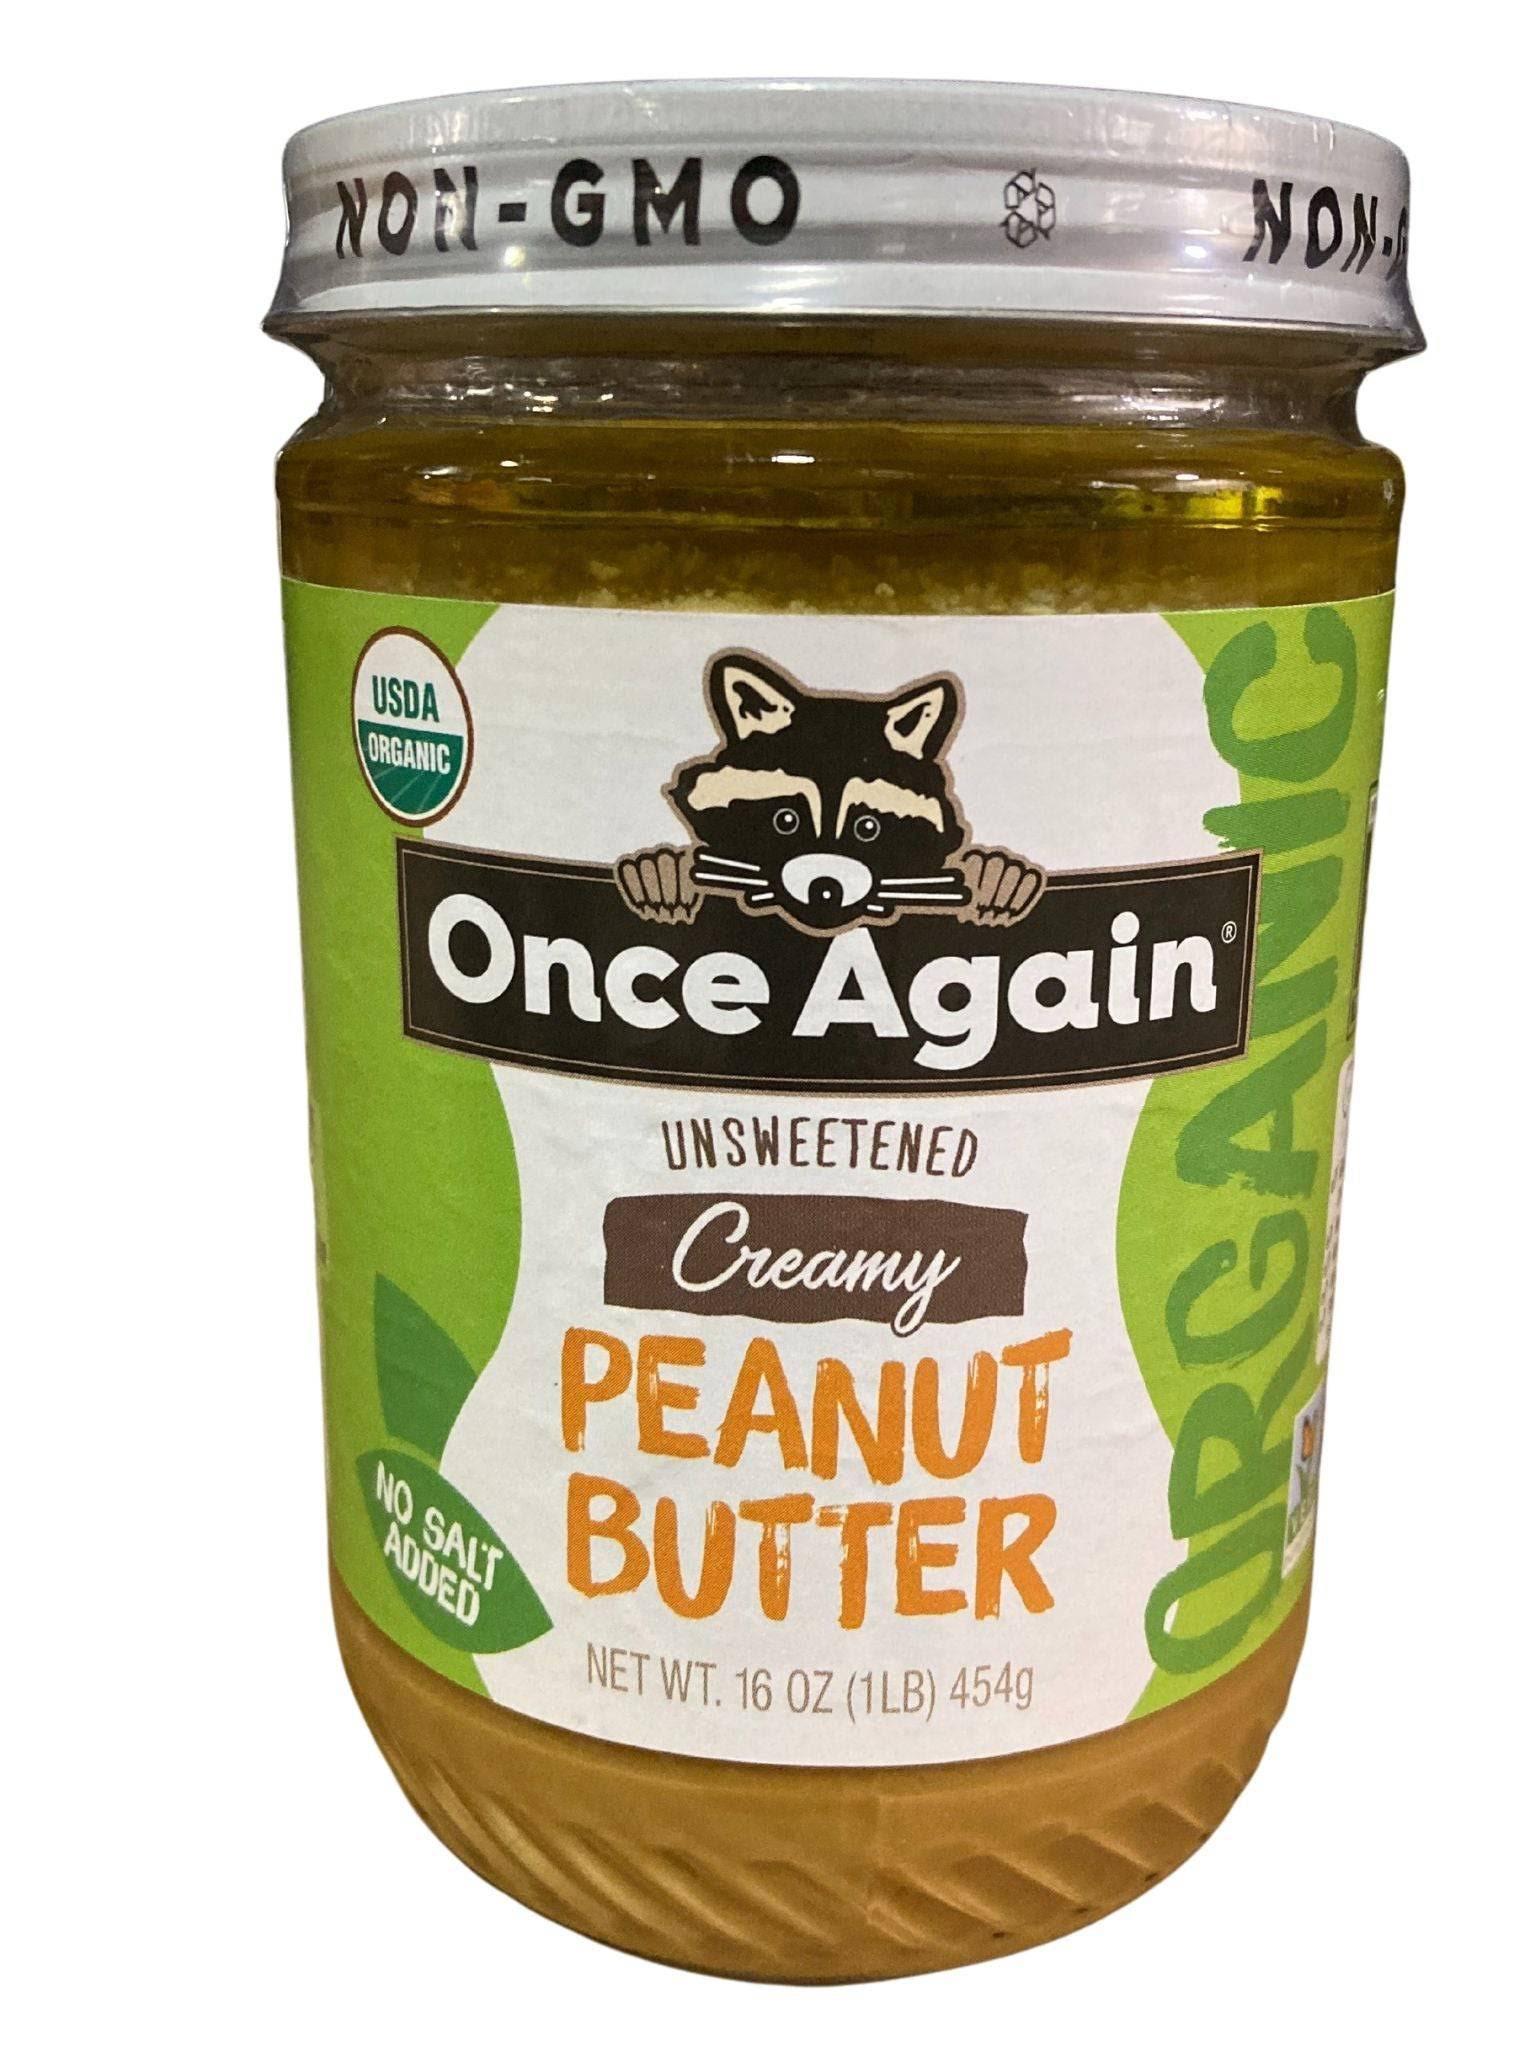 Once Again Organic Peanut Butter - Creamy, No Salt, 16oz